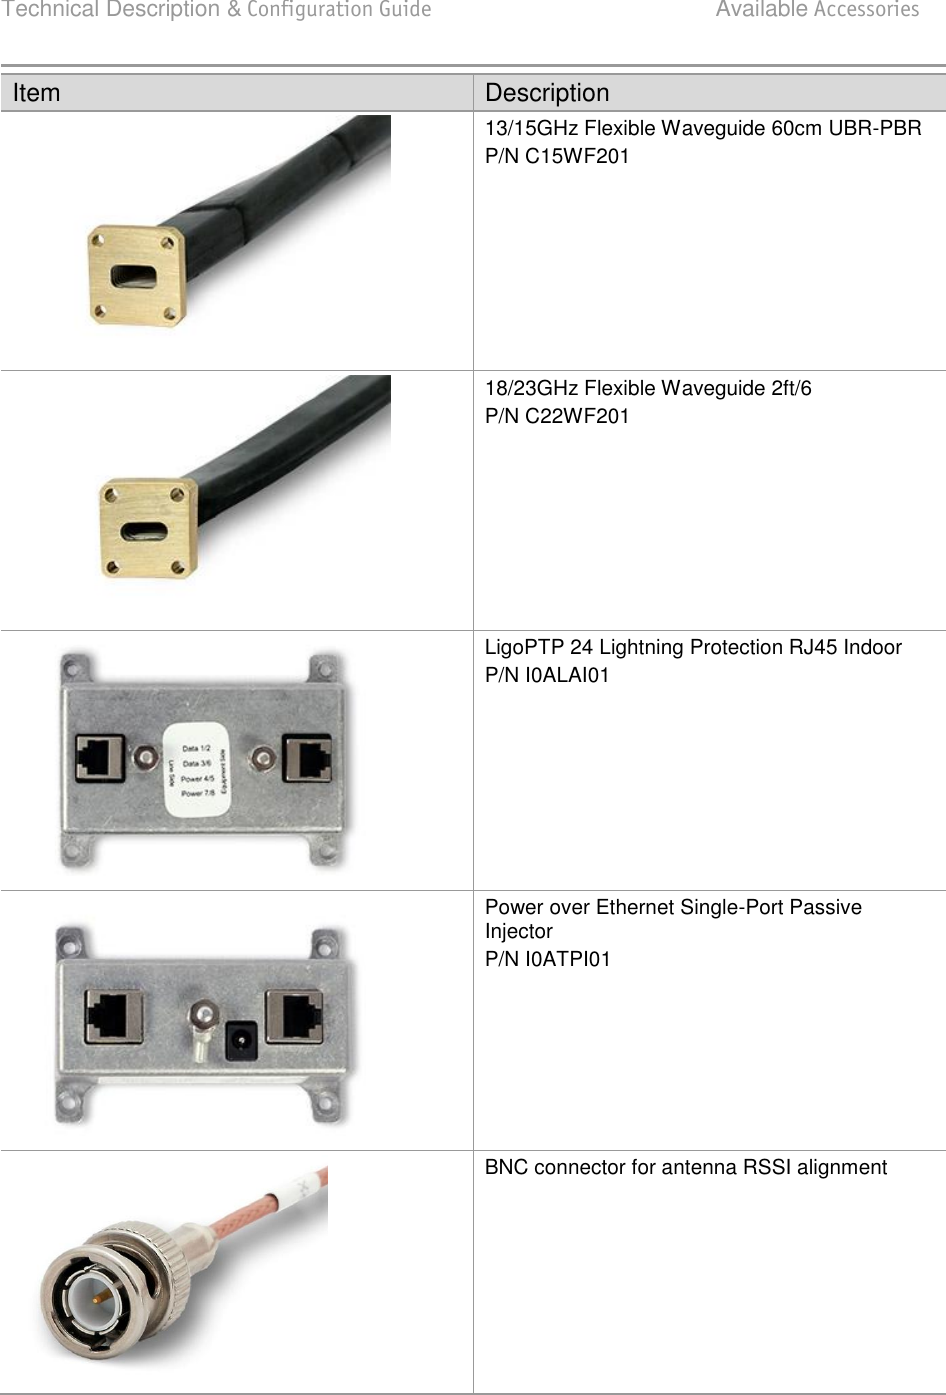 Technical Description &amp; Configuration Guide  Available Accessories  LigoWave  Page 90 Item Description  13/15GHz Flexible Waveguide 60cm UBR-PBR P/N C15WF201  18/23GHz Flexible Waveguide 2ft/6 P/N C22WF201  LigoPTP 24 Lightning Protection RJ45 Indoor P/N I0ALAI01  Power over Ethernet Single-Port Passive Injector P/N I0ATPI01  BNC connector for antenna RSSI alignment 